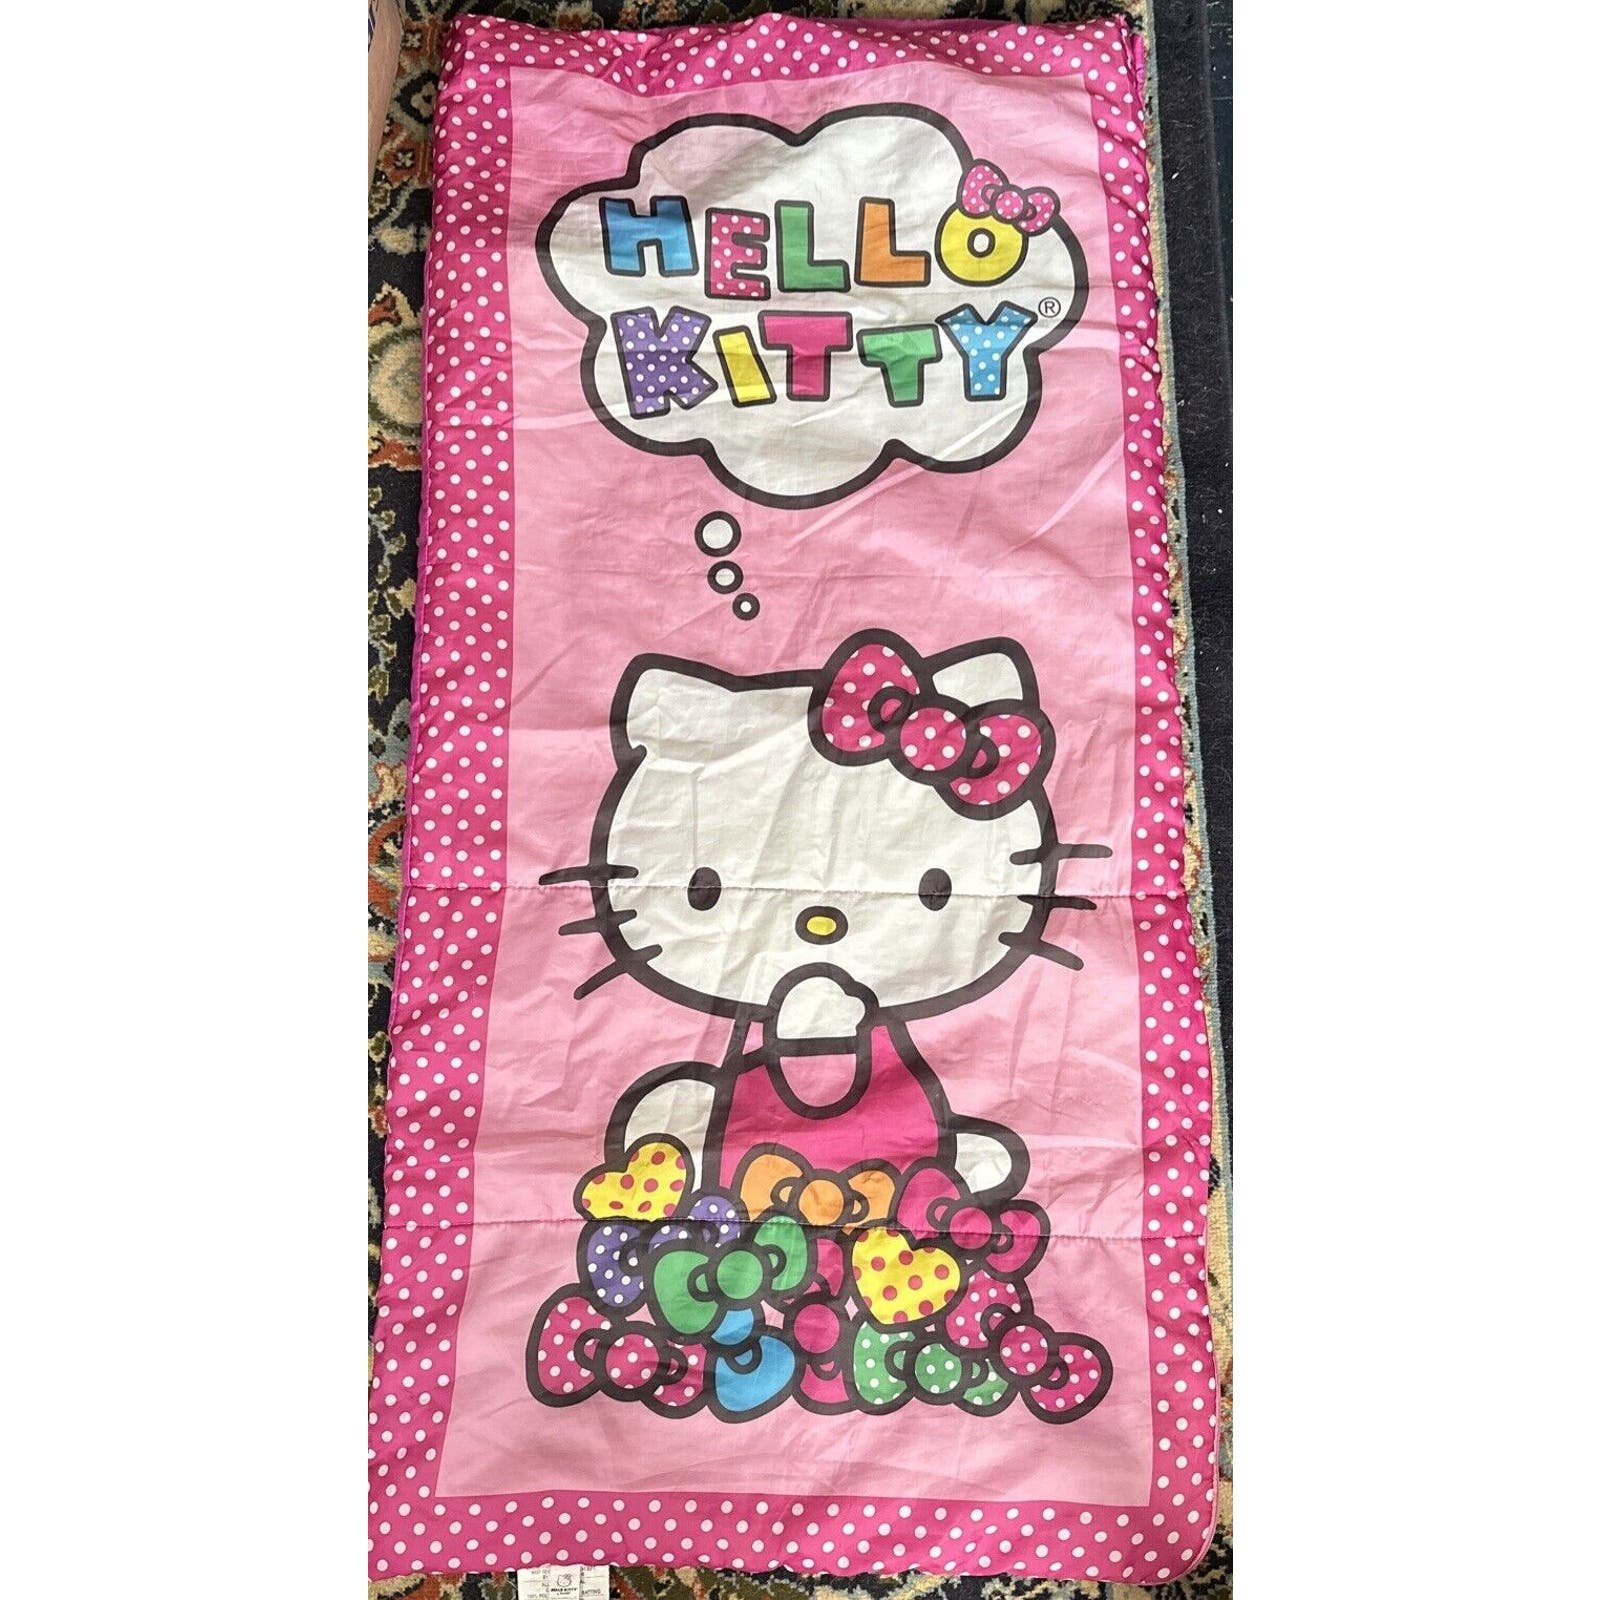 Hello Kitty Sanrio 2014 Sleeping Bag 54